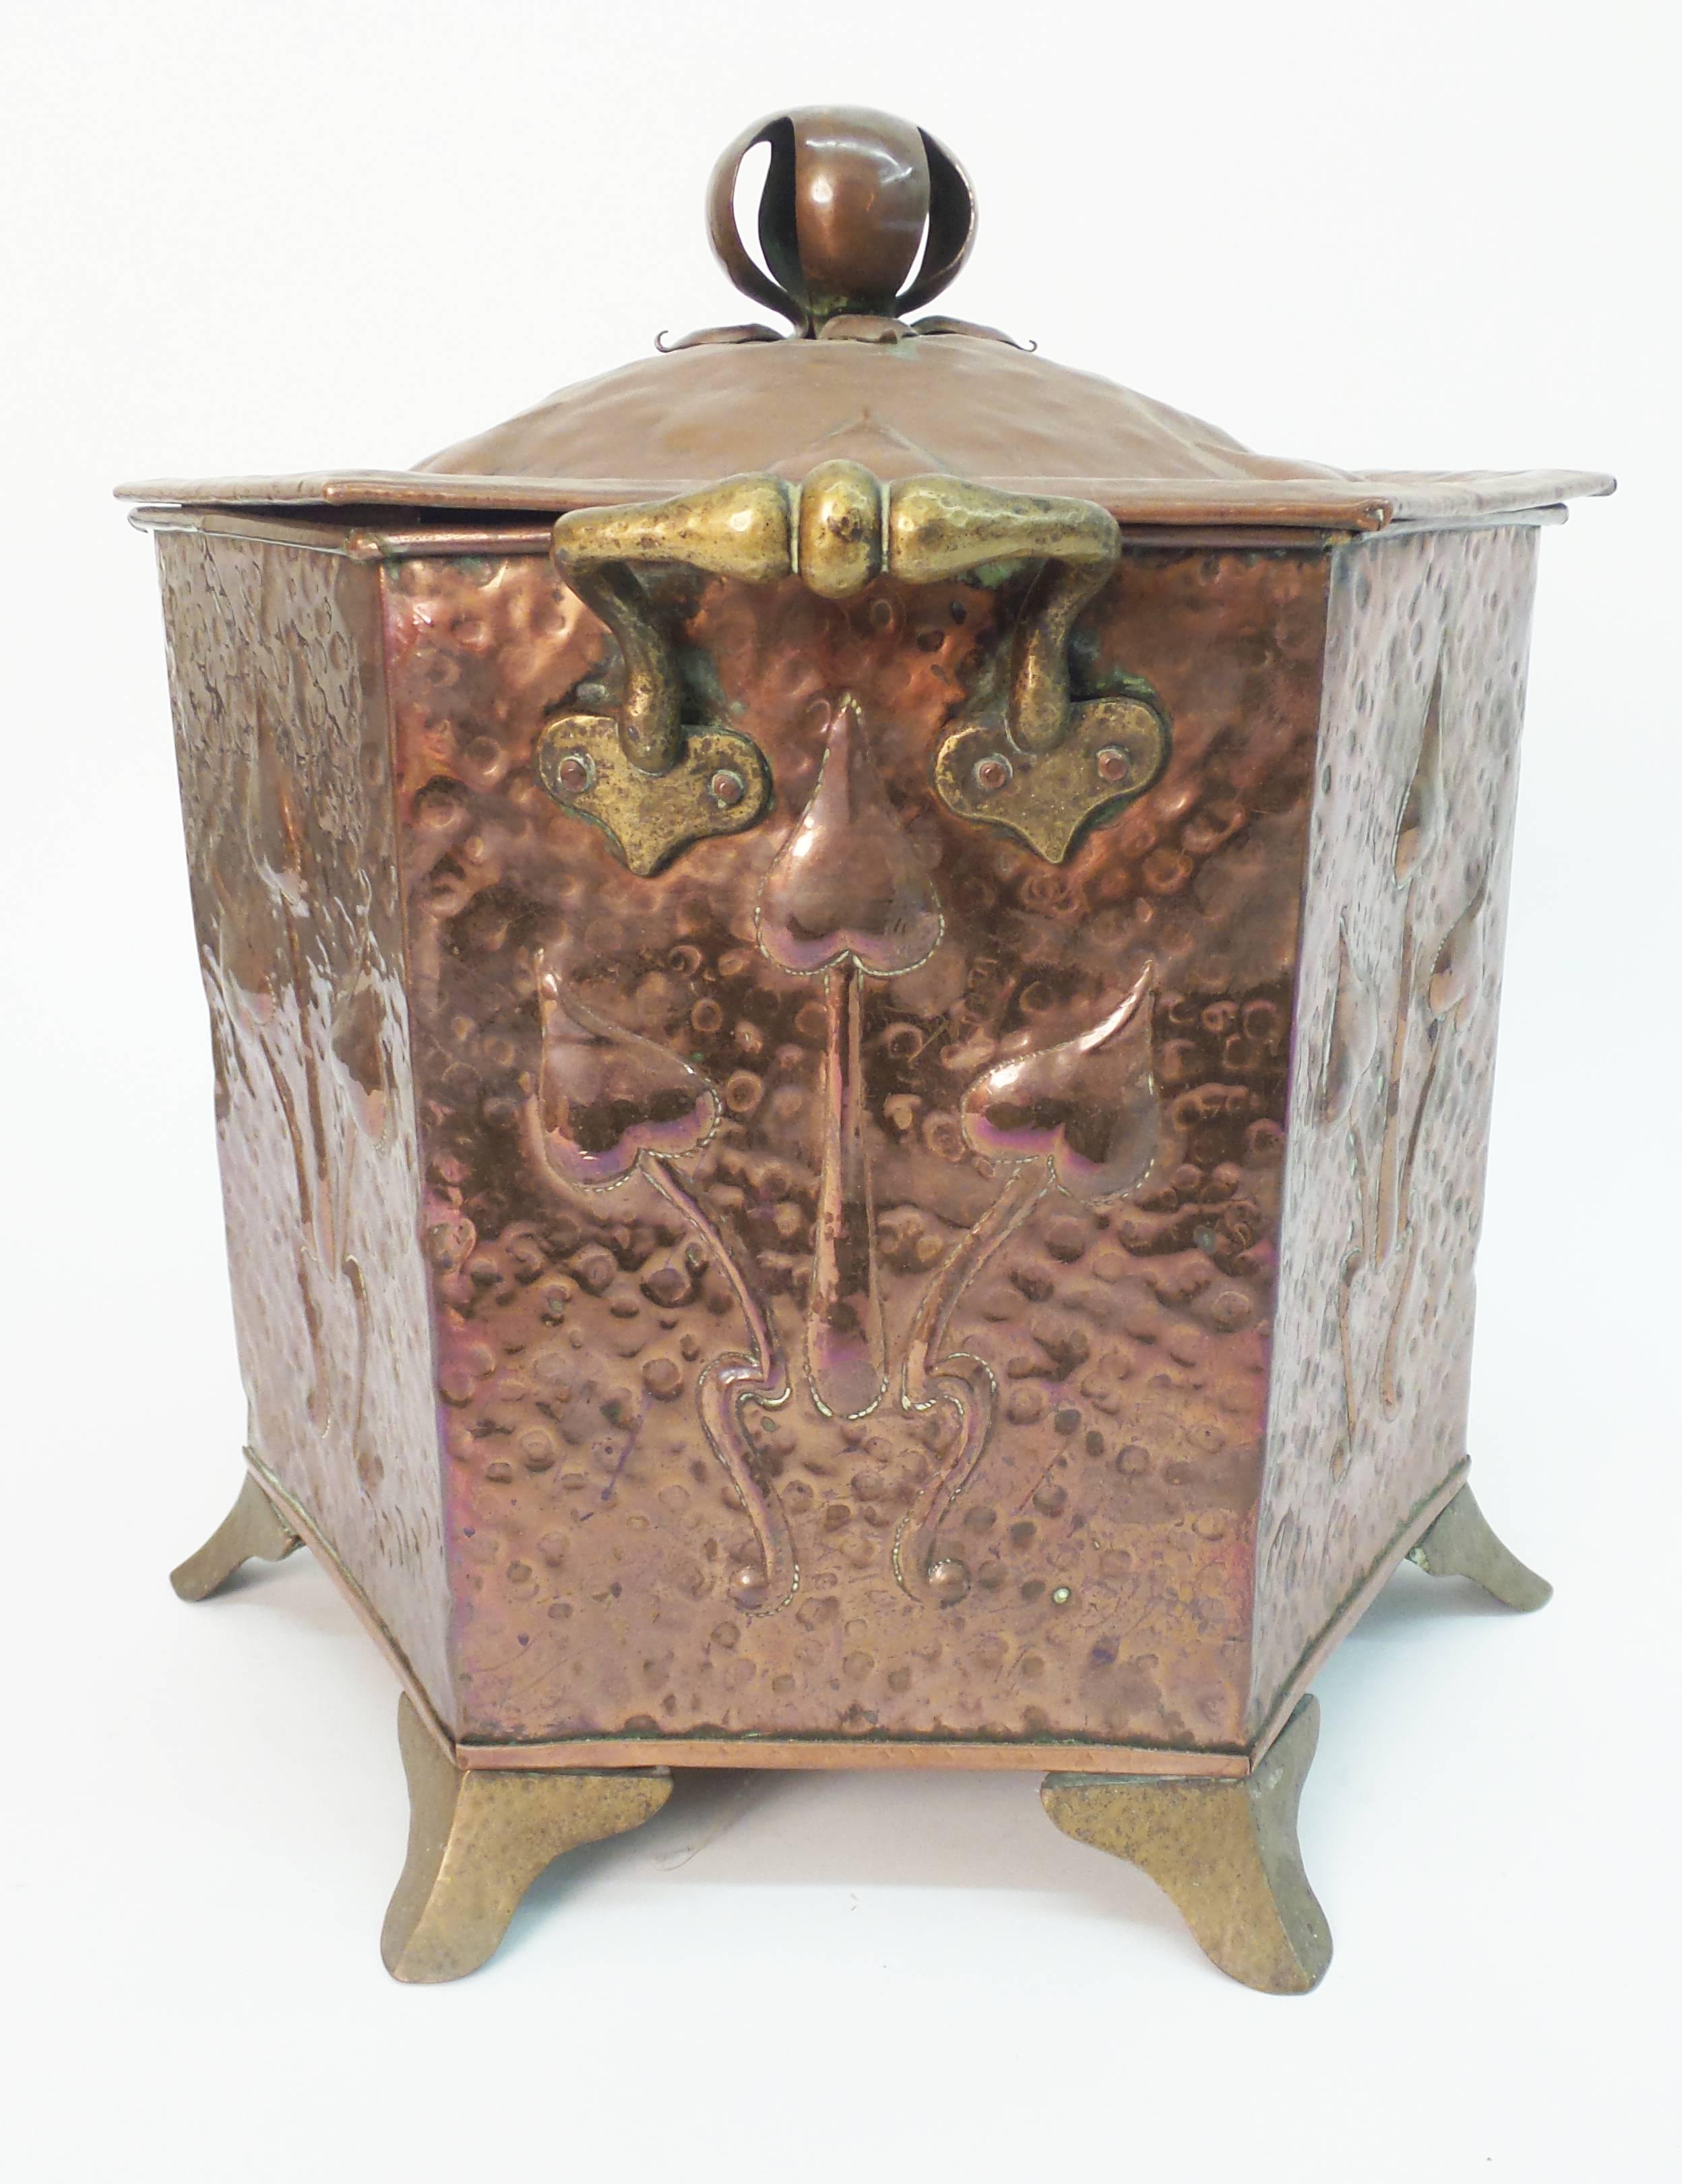 An Art Nouveau period hammered copper coal scuttle of hexagonal form and having brass feet and handles, England, circa 1885.